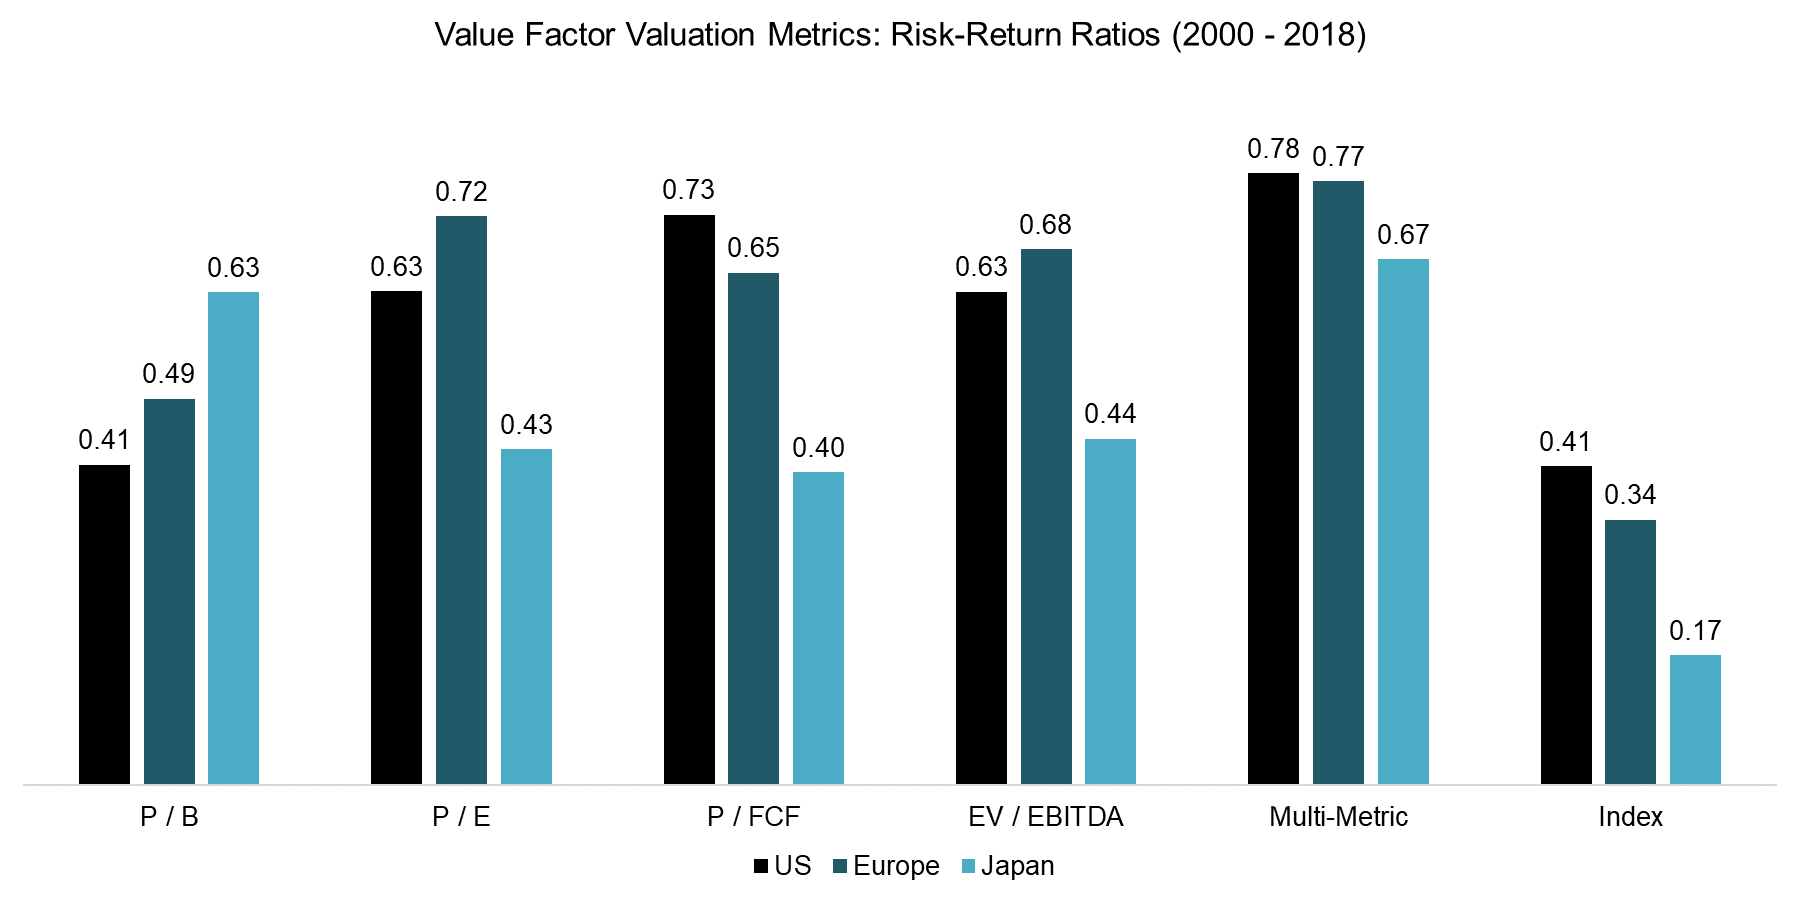 Value Factor Valuation Metrics Risk-Return Ratios (2000 - 2018)i